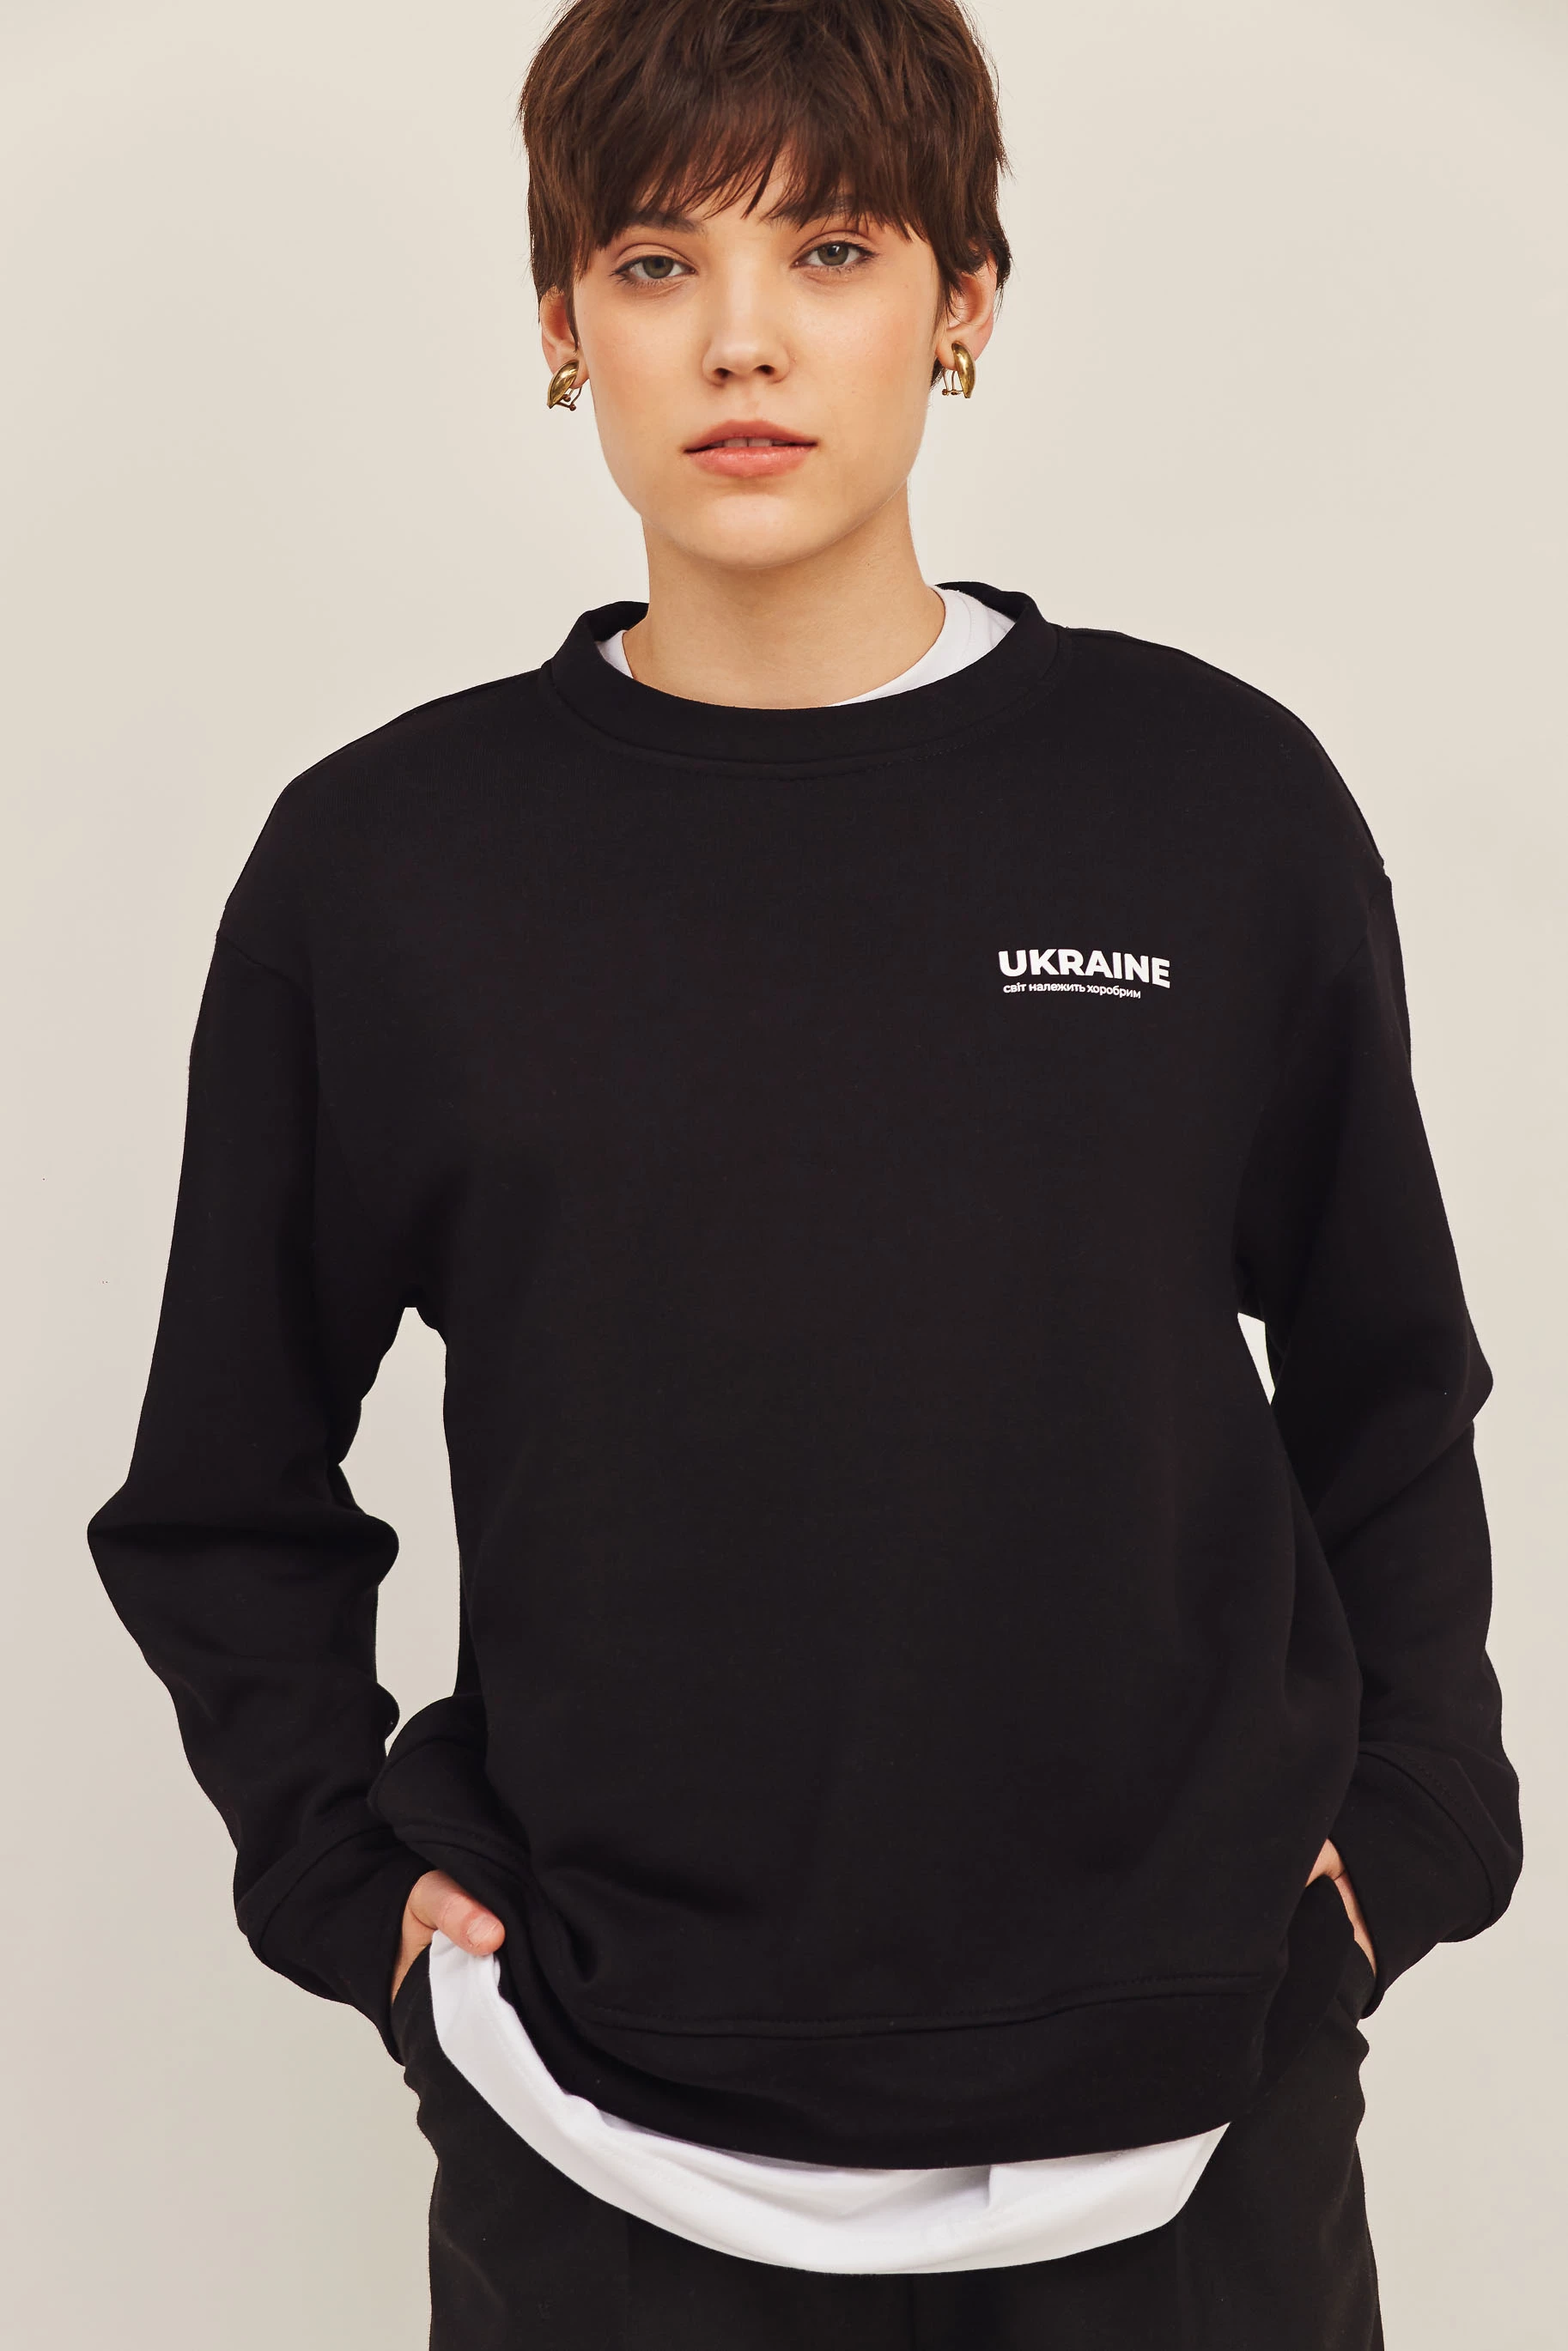 Black jersey sweatshirt with "Ukraine" print, photo 1